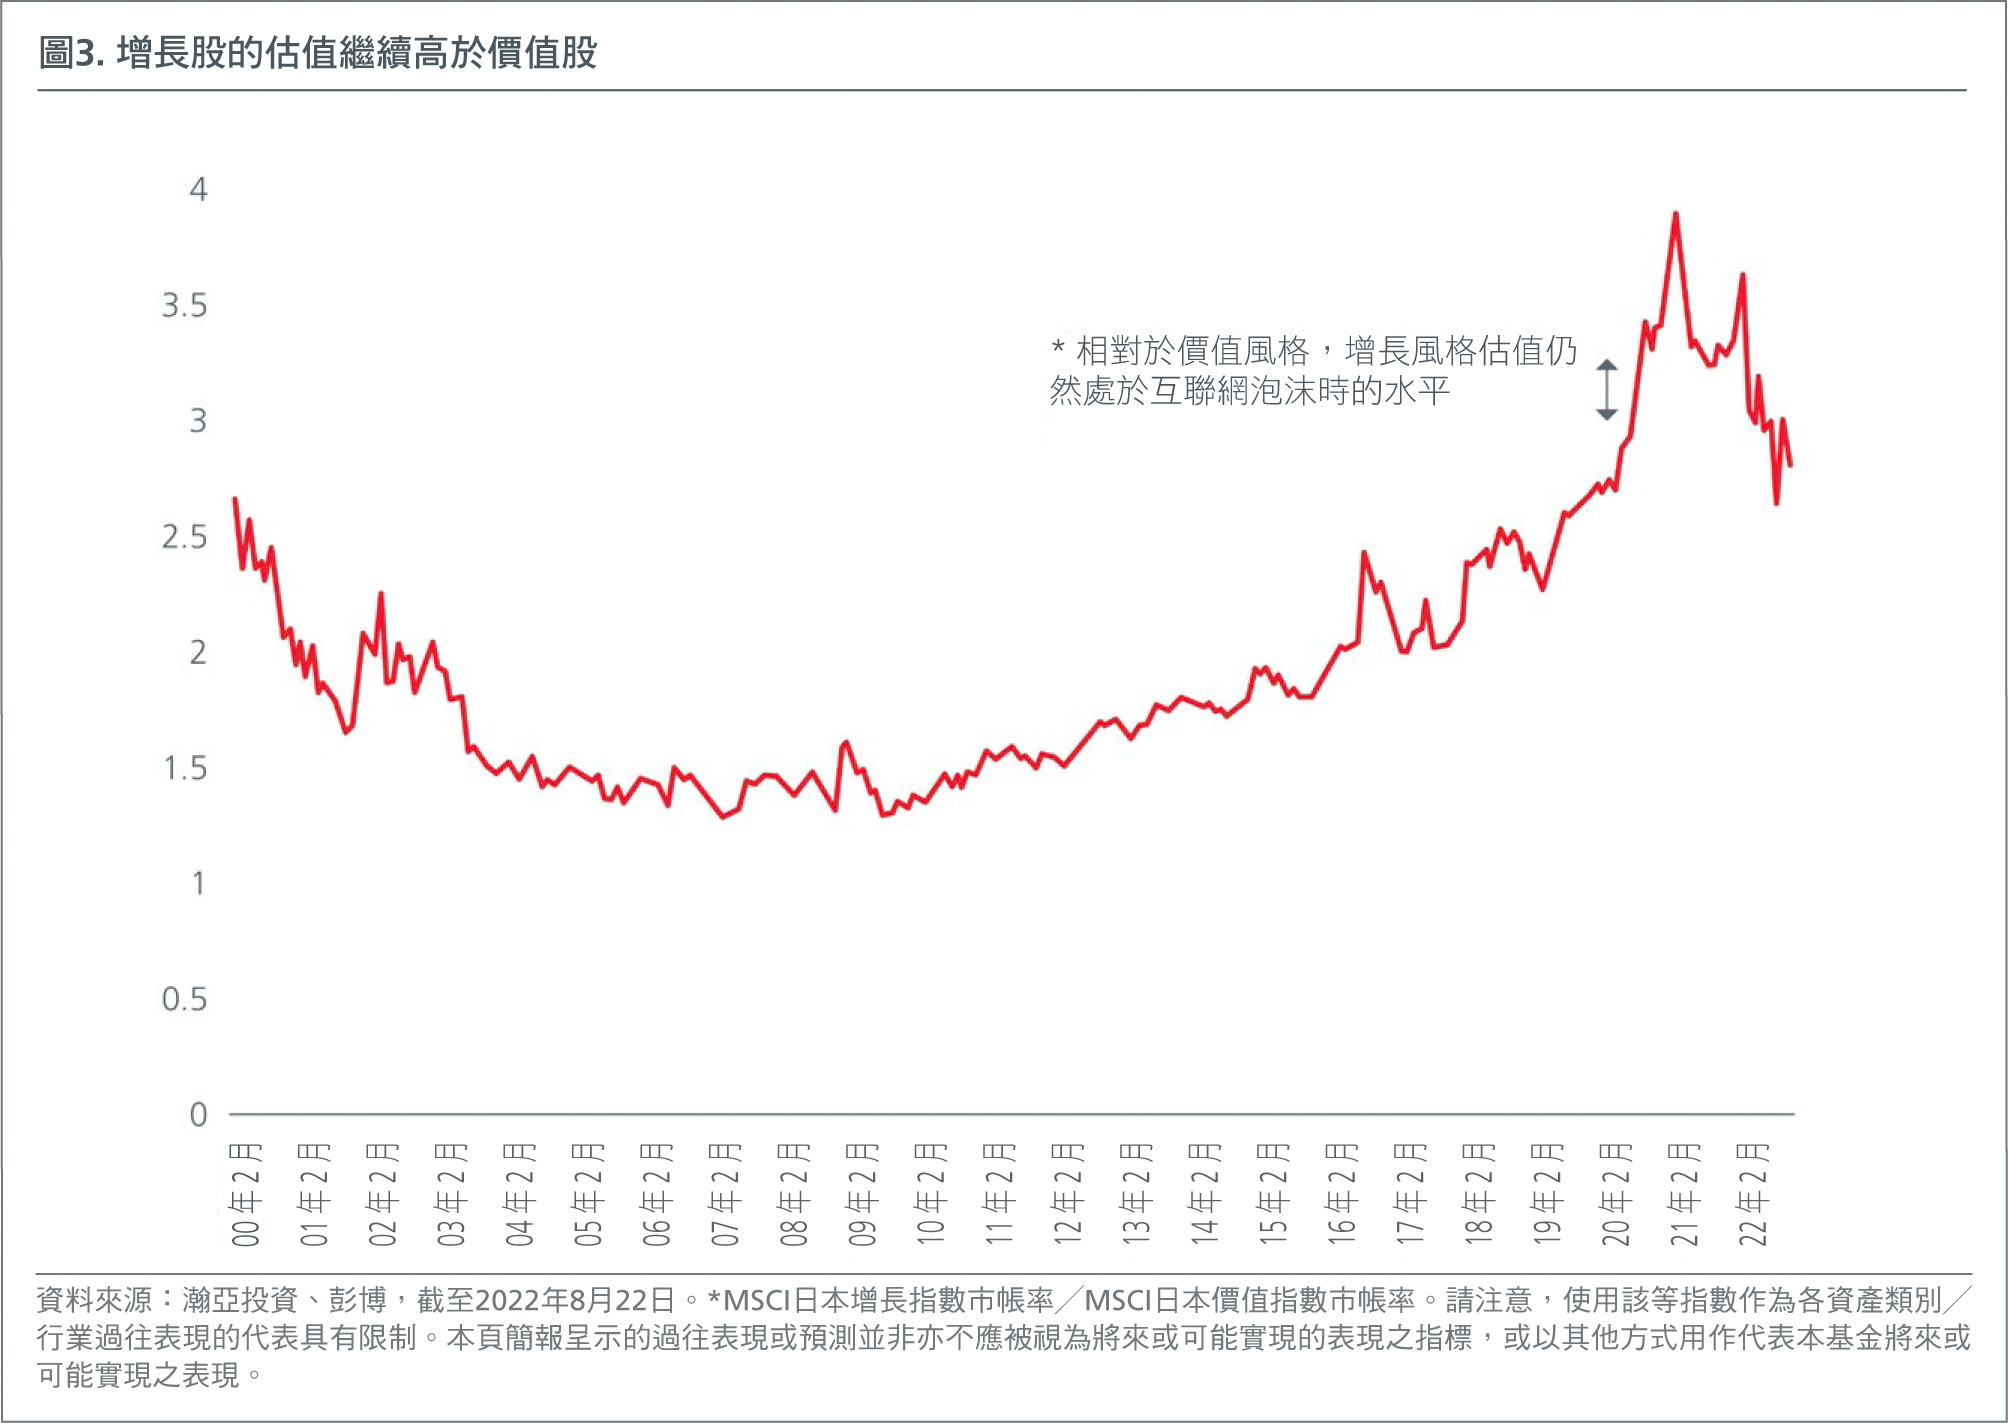 HK-CN-japans-good-value-creates-alpha-opportunities-Fig3